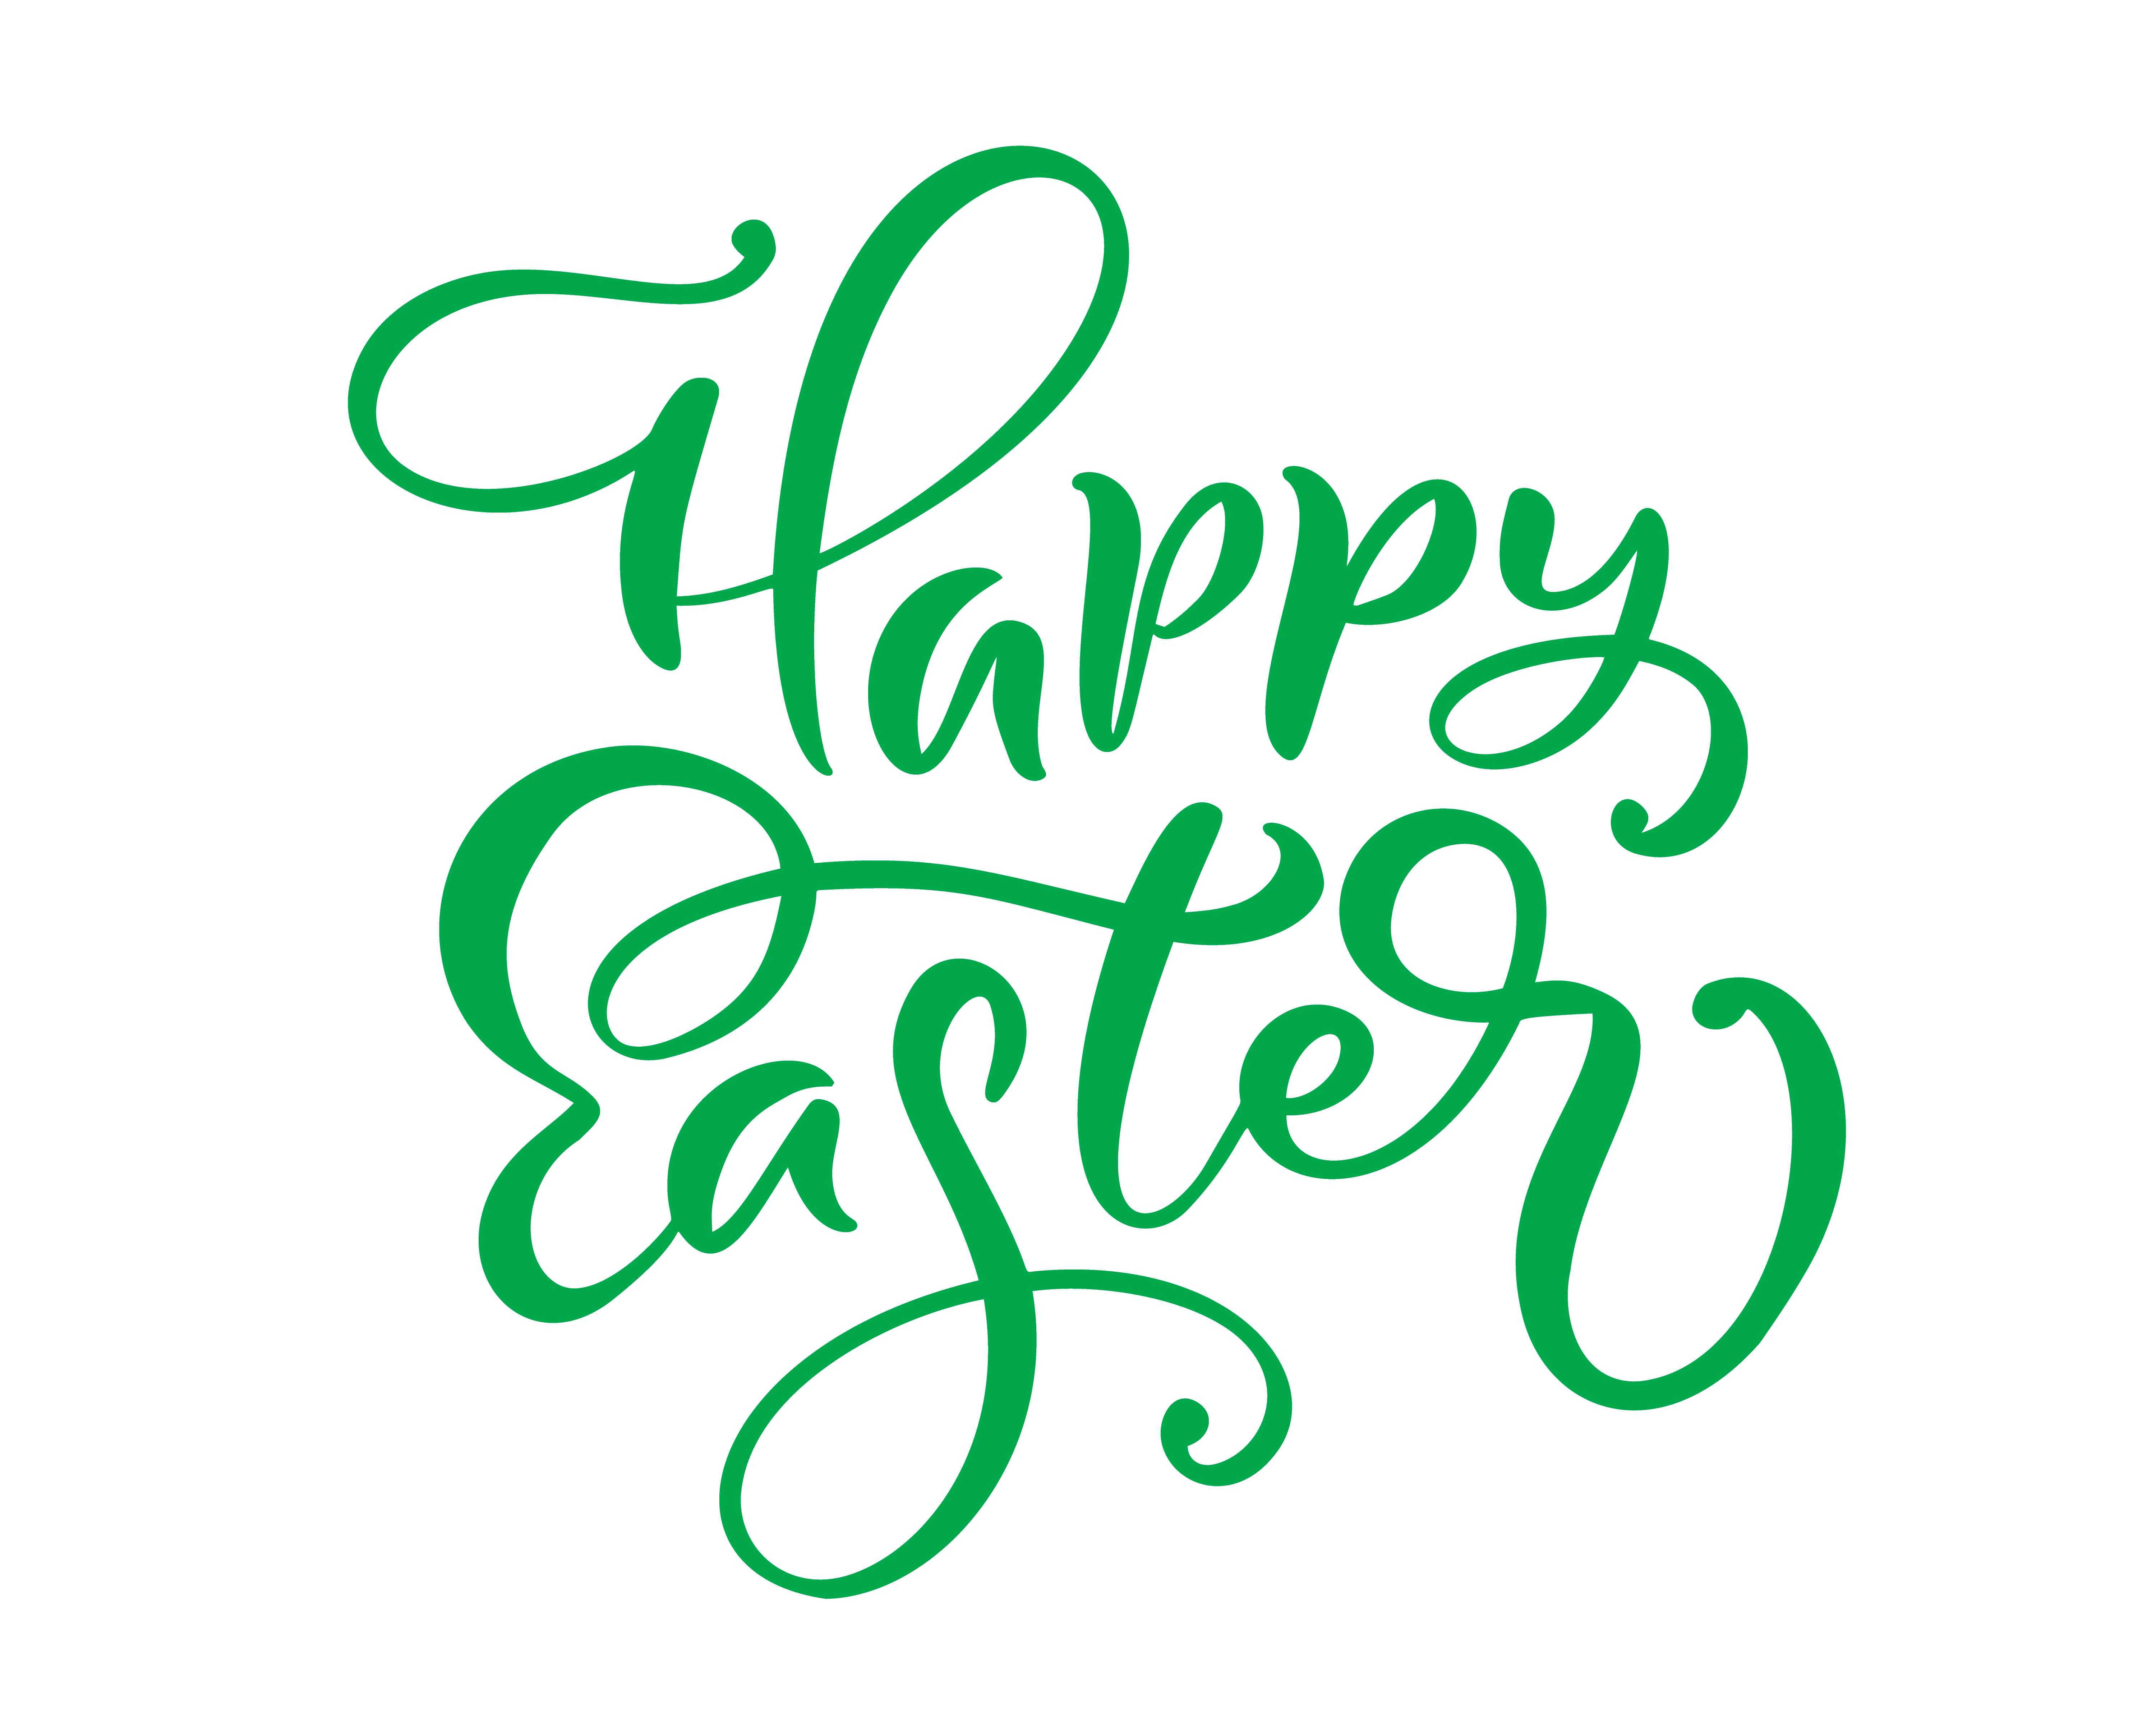 Green Happy Easter handwritten lettering. Happy Easter typography